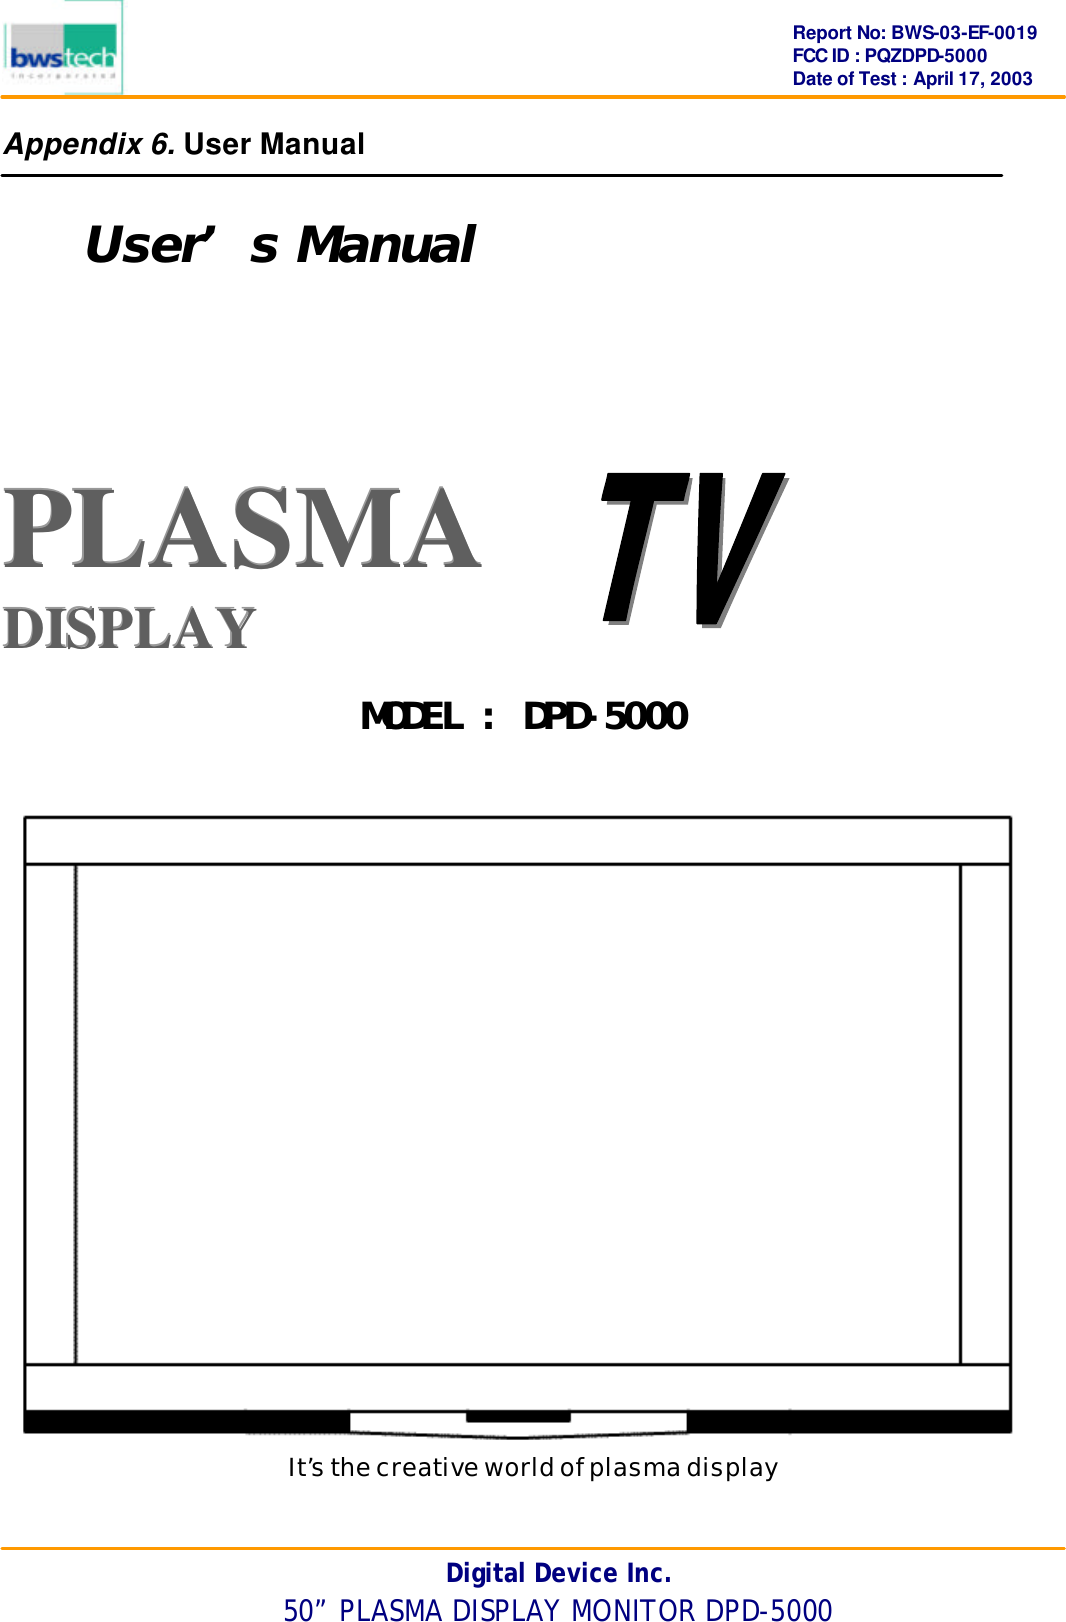      Report No: BWS-03-EF-0019 FCC ID : PQZDPD-5000 Date of Test : April 17, 2003 Digital Device Inc. 50” PLASMA DISPLAY MONITOR DPD-5000 Appendix 6. User Manual  User’s Manual   PPPLLLAAASSSMMMAAA   DDDIIISSSPPPLLLAAAYYY       It’s the creative world of plasma display  MODEL : DPD-5000 